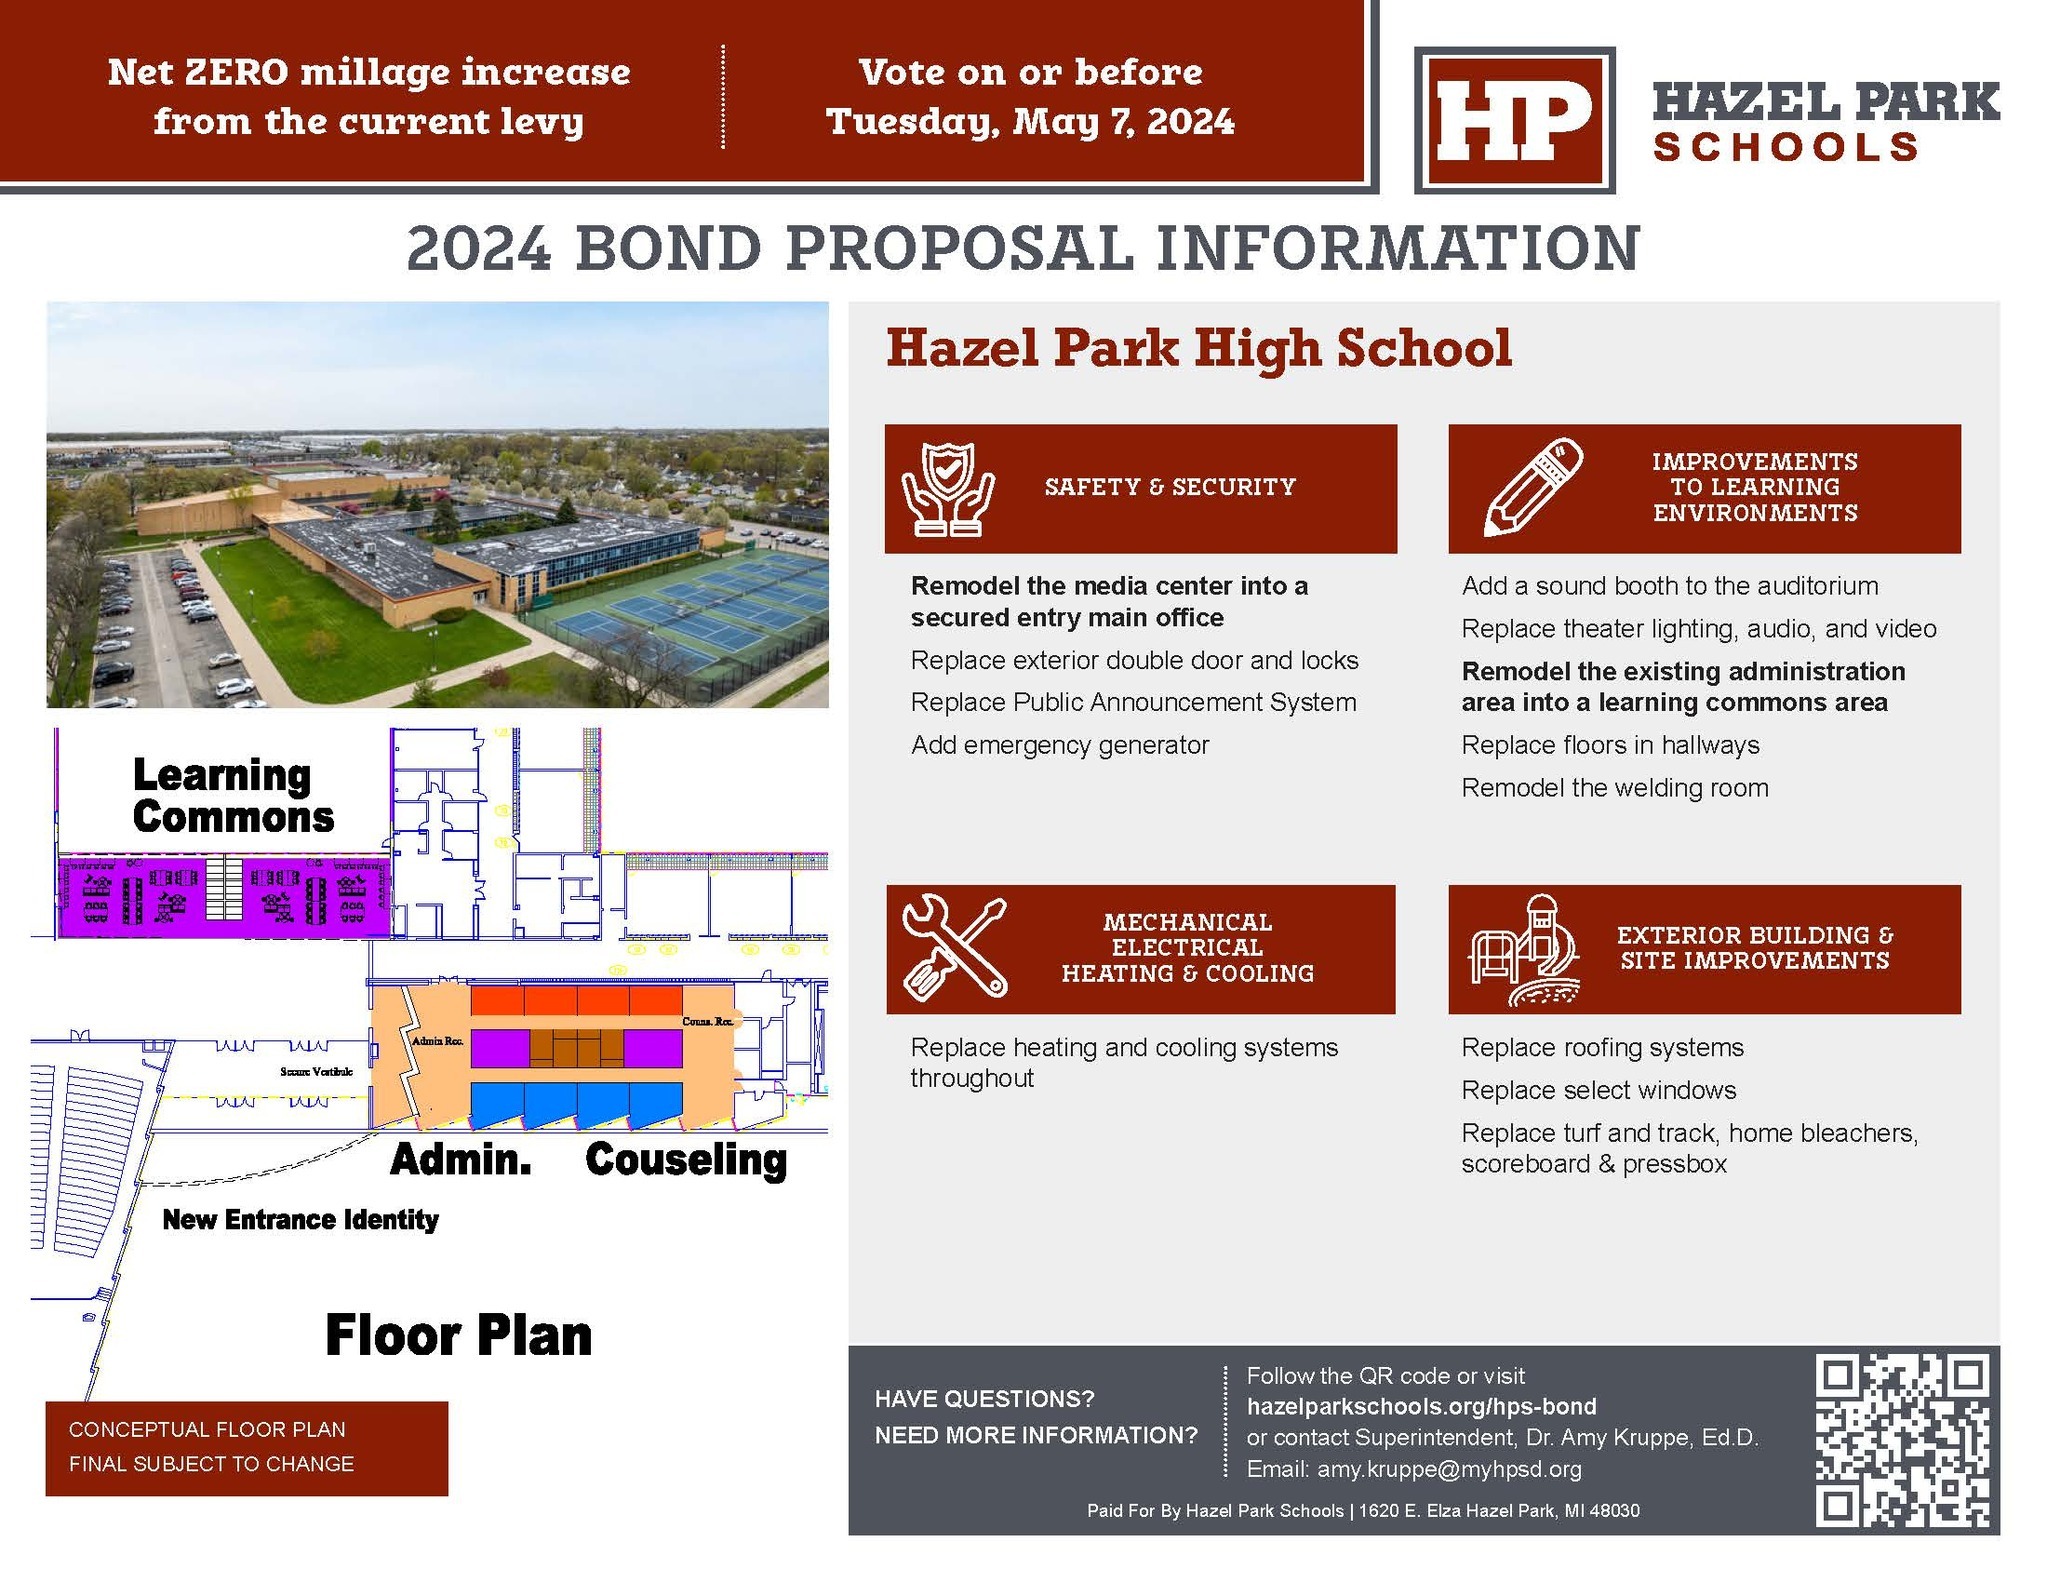 Hazel Park High School Bond Proposal Information